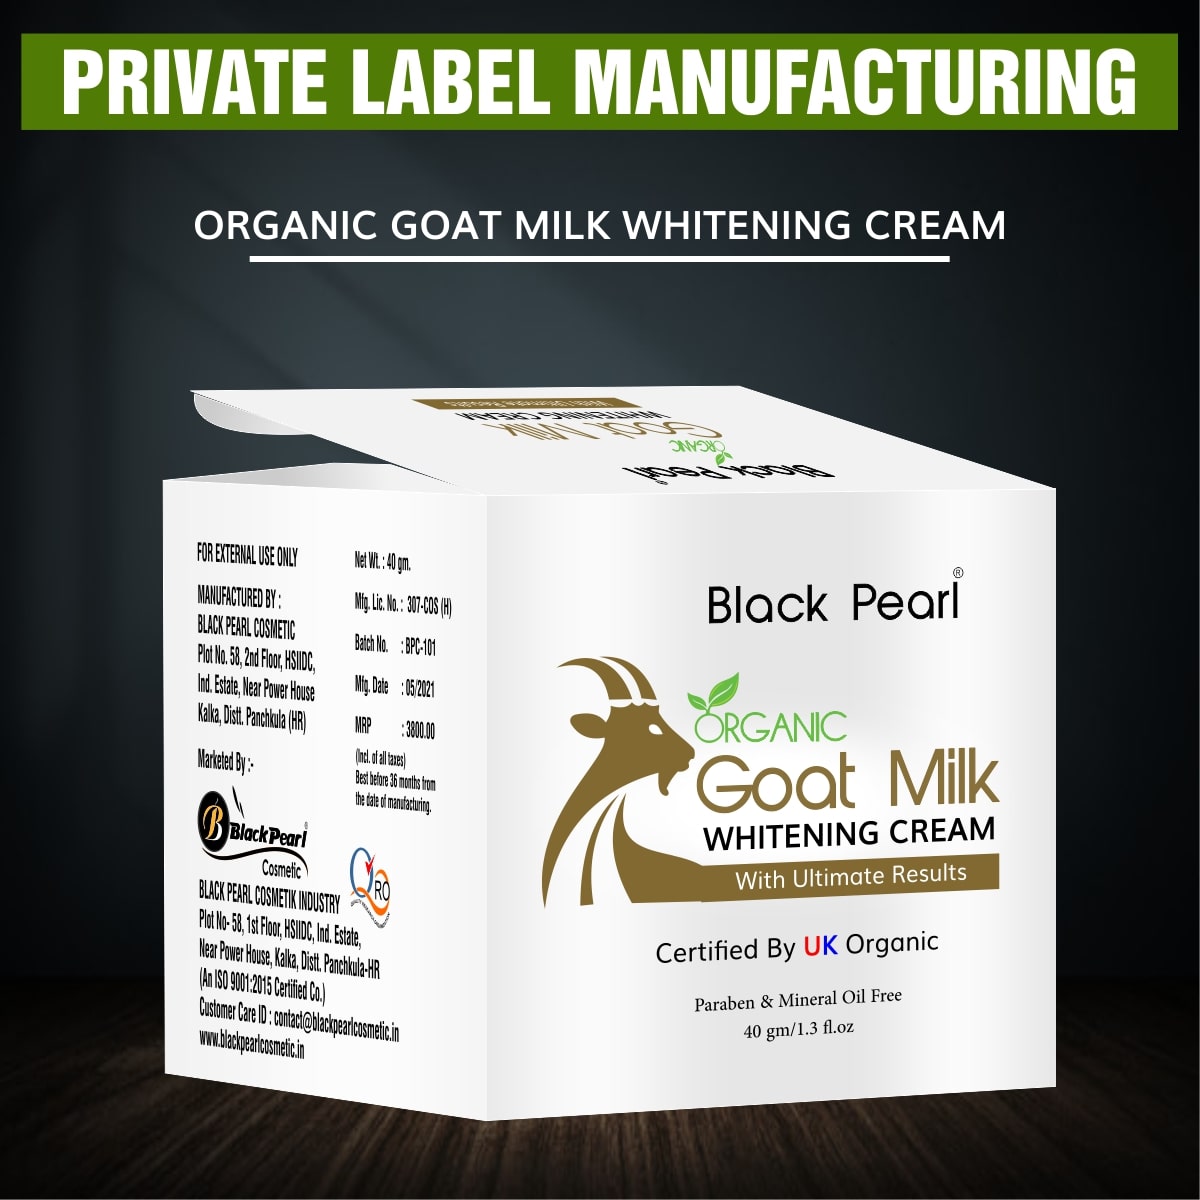 Organic Goat Milk Whitening Cream Private Label Manufacturing